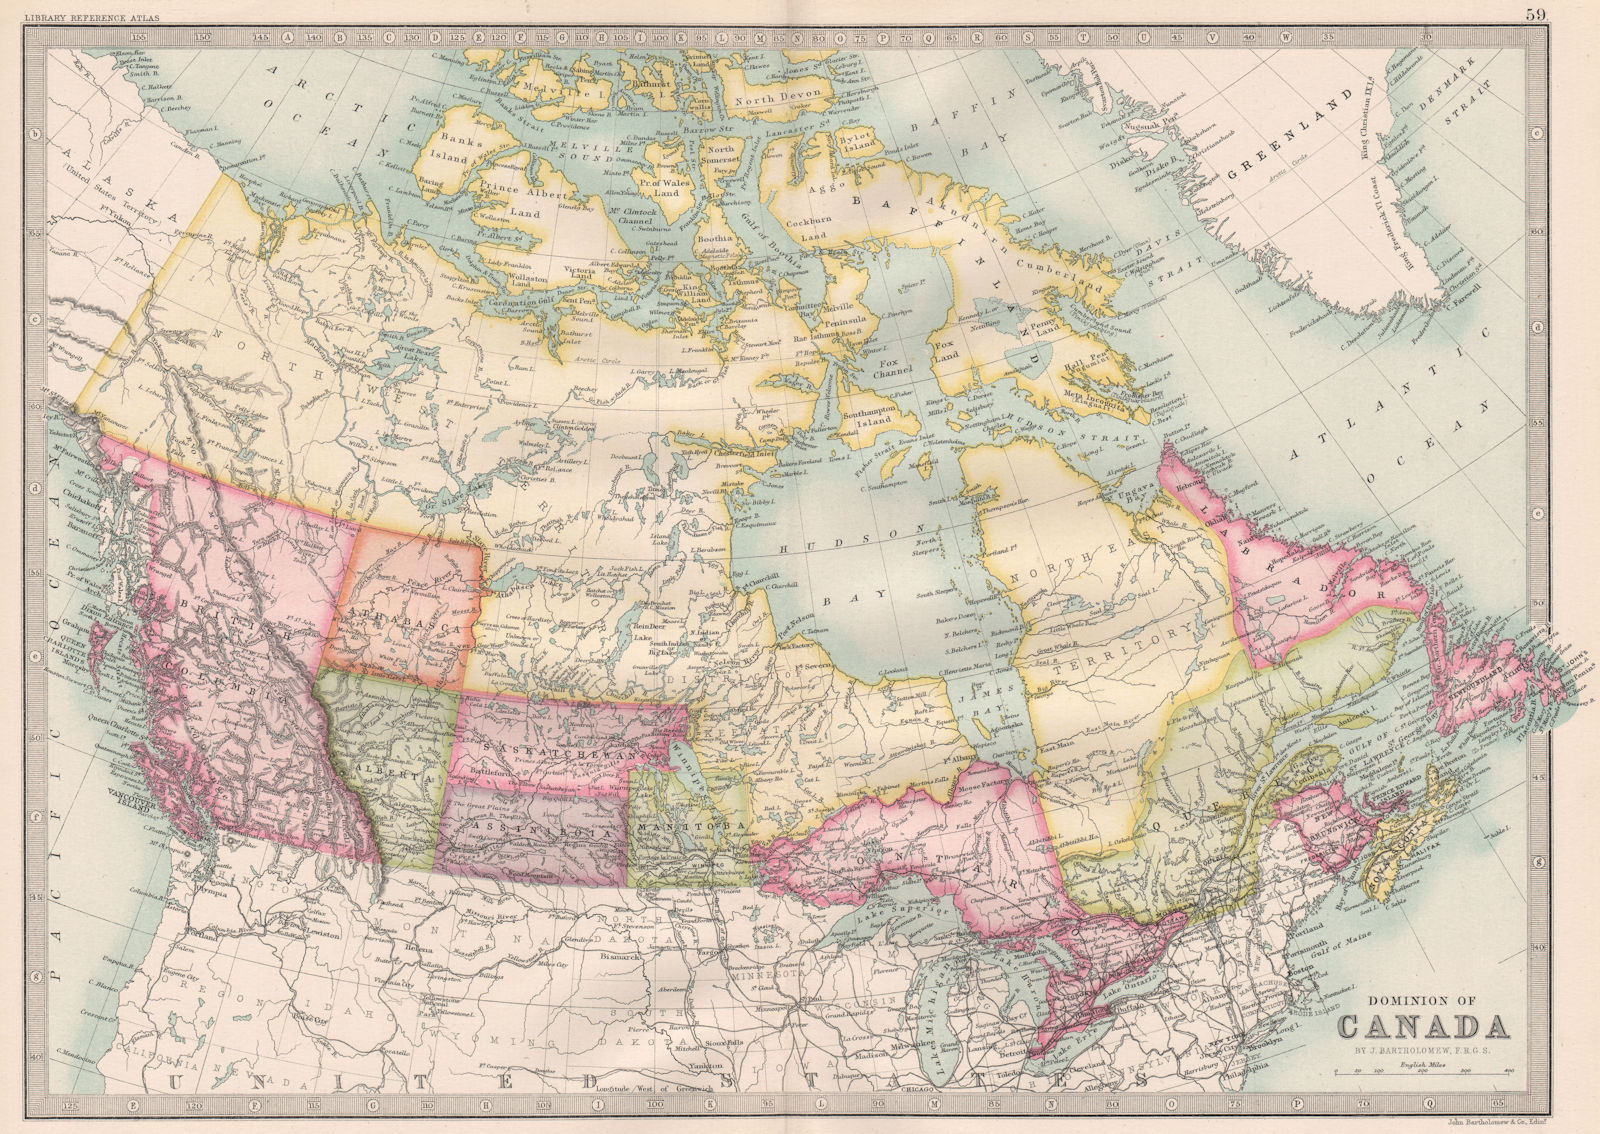 Associate Product CANADA. Dominion of Canada. Showing provinces. BARTHOLOMEW 1890 old map